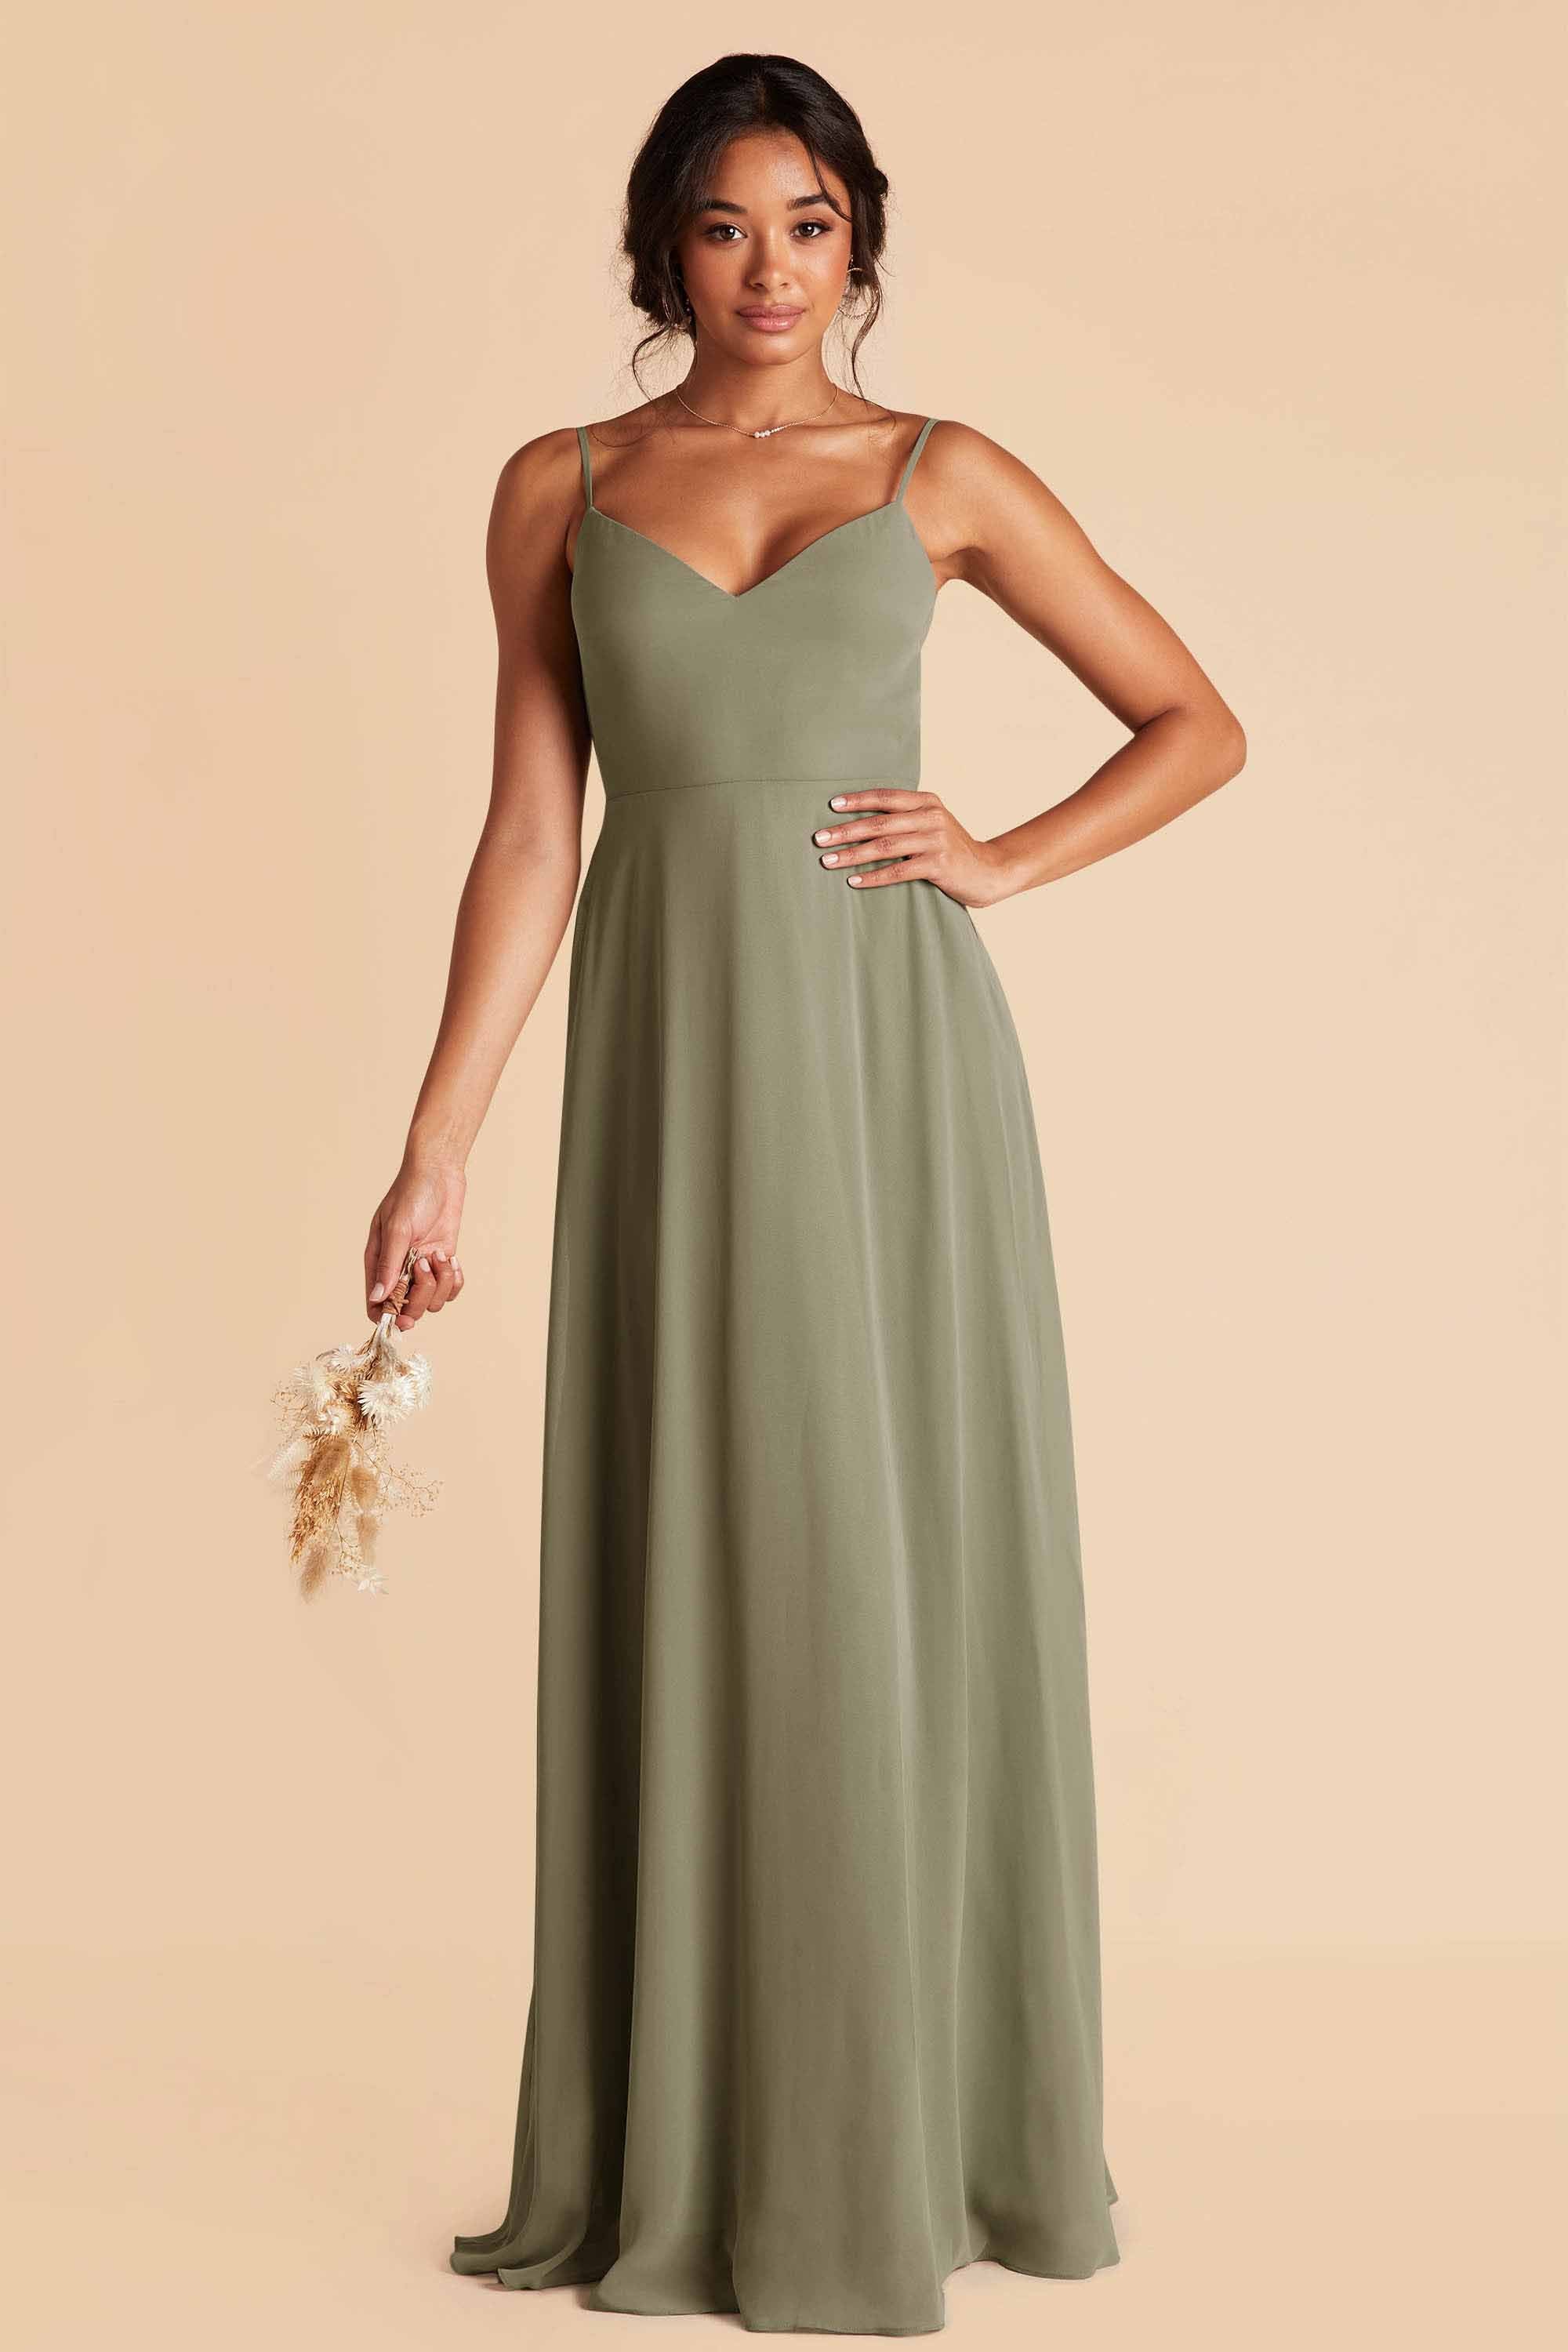 Moss Green Devin Convertible Dress by Birdy Grey